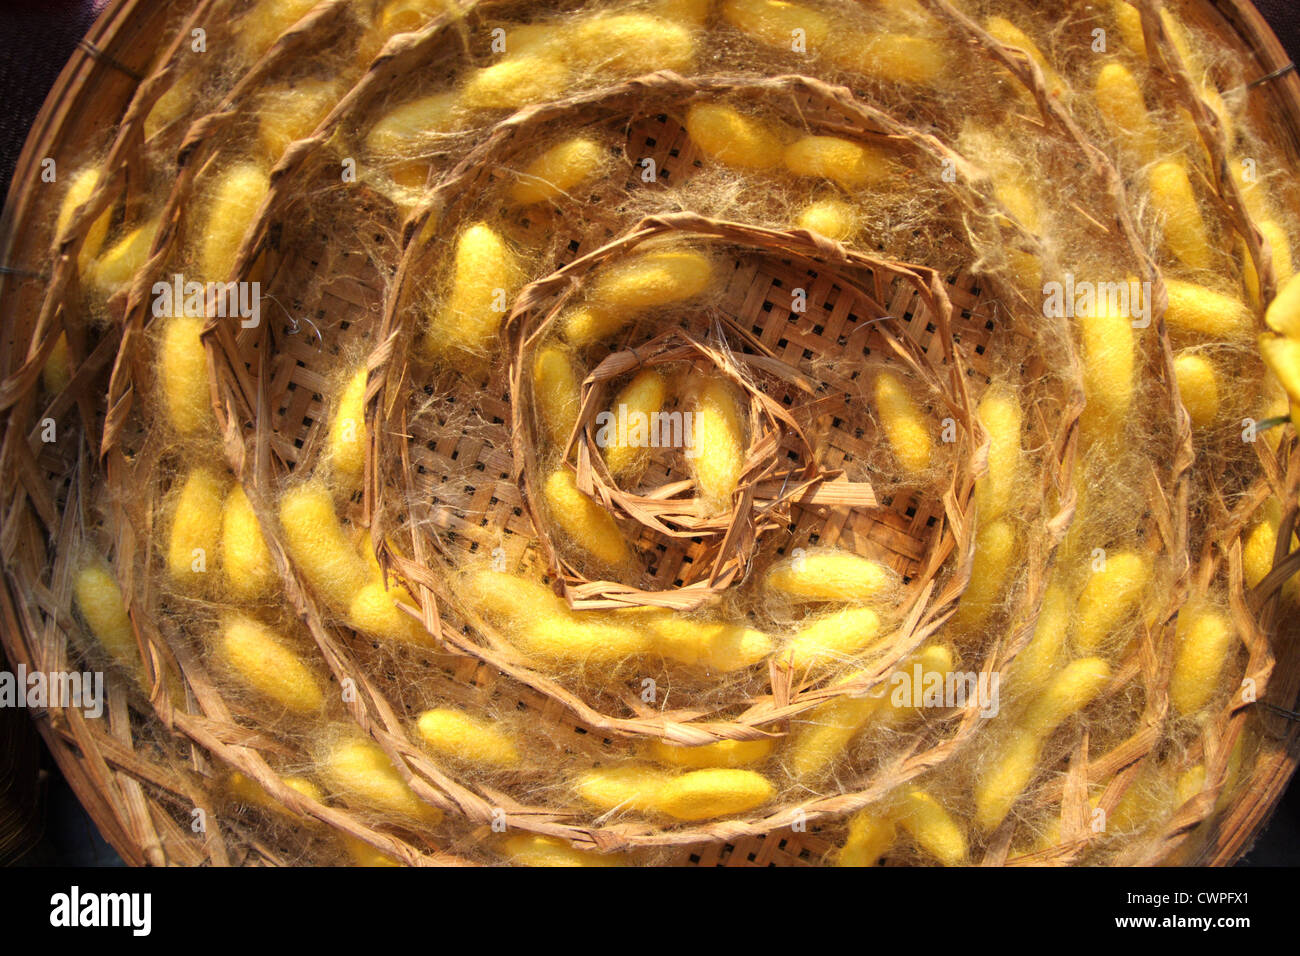 Silkworm larvae inside cocoons Stock Photo